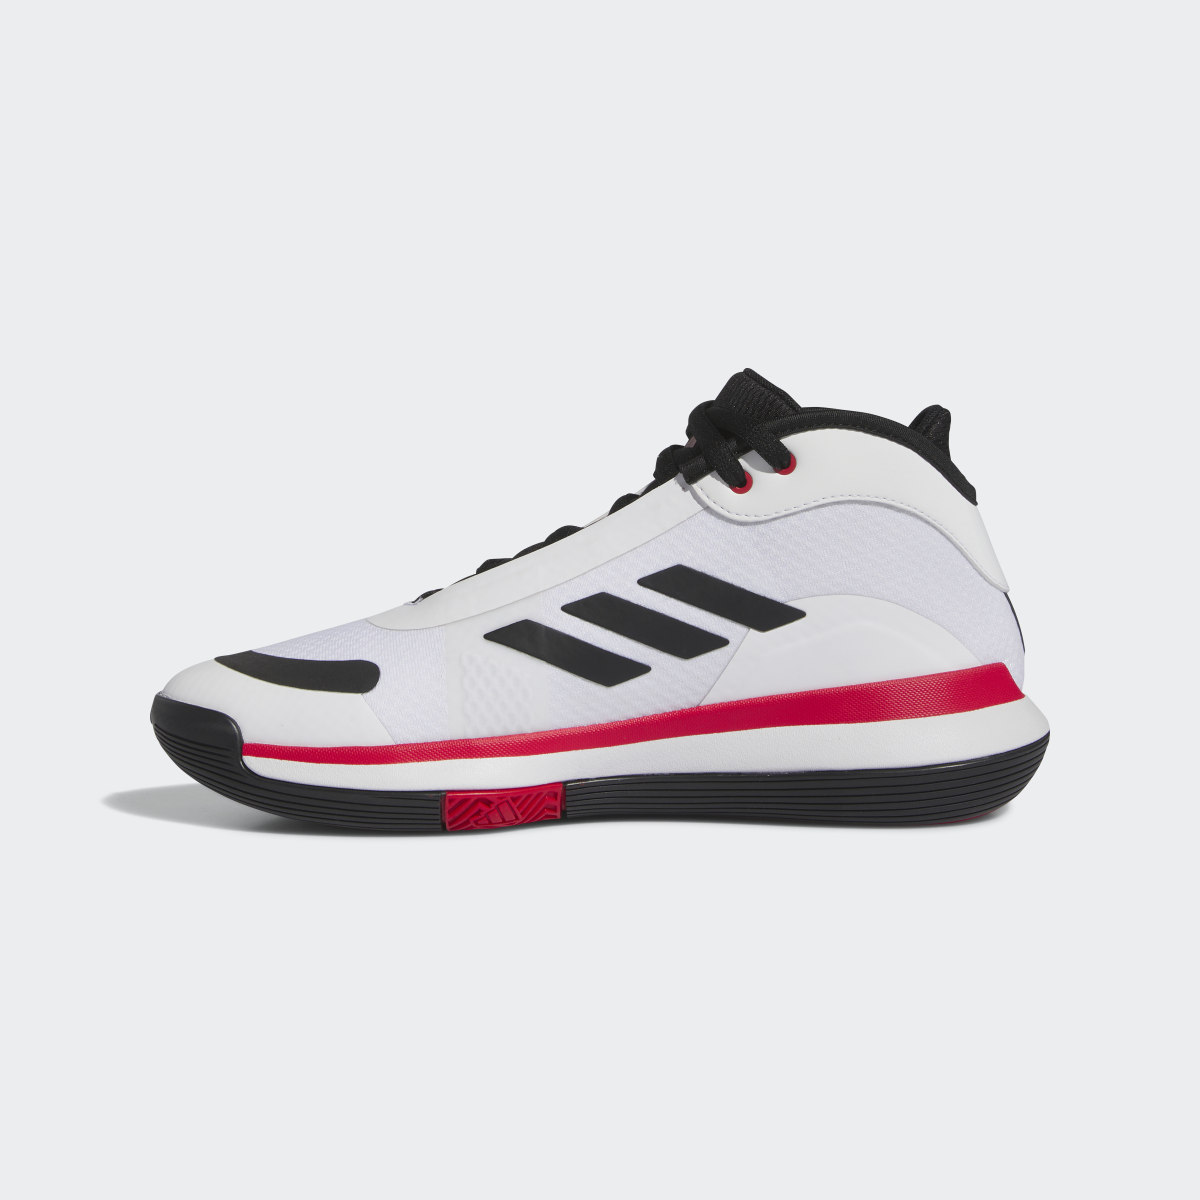 Adidas Bounce Legends Shoes. 9